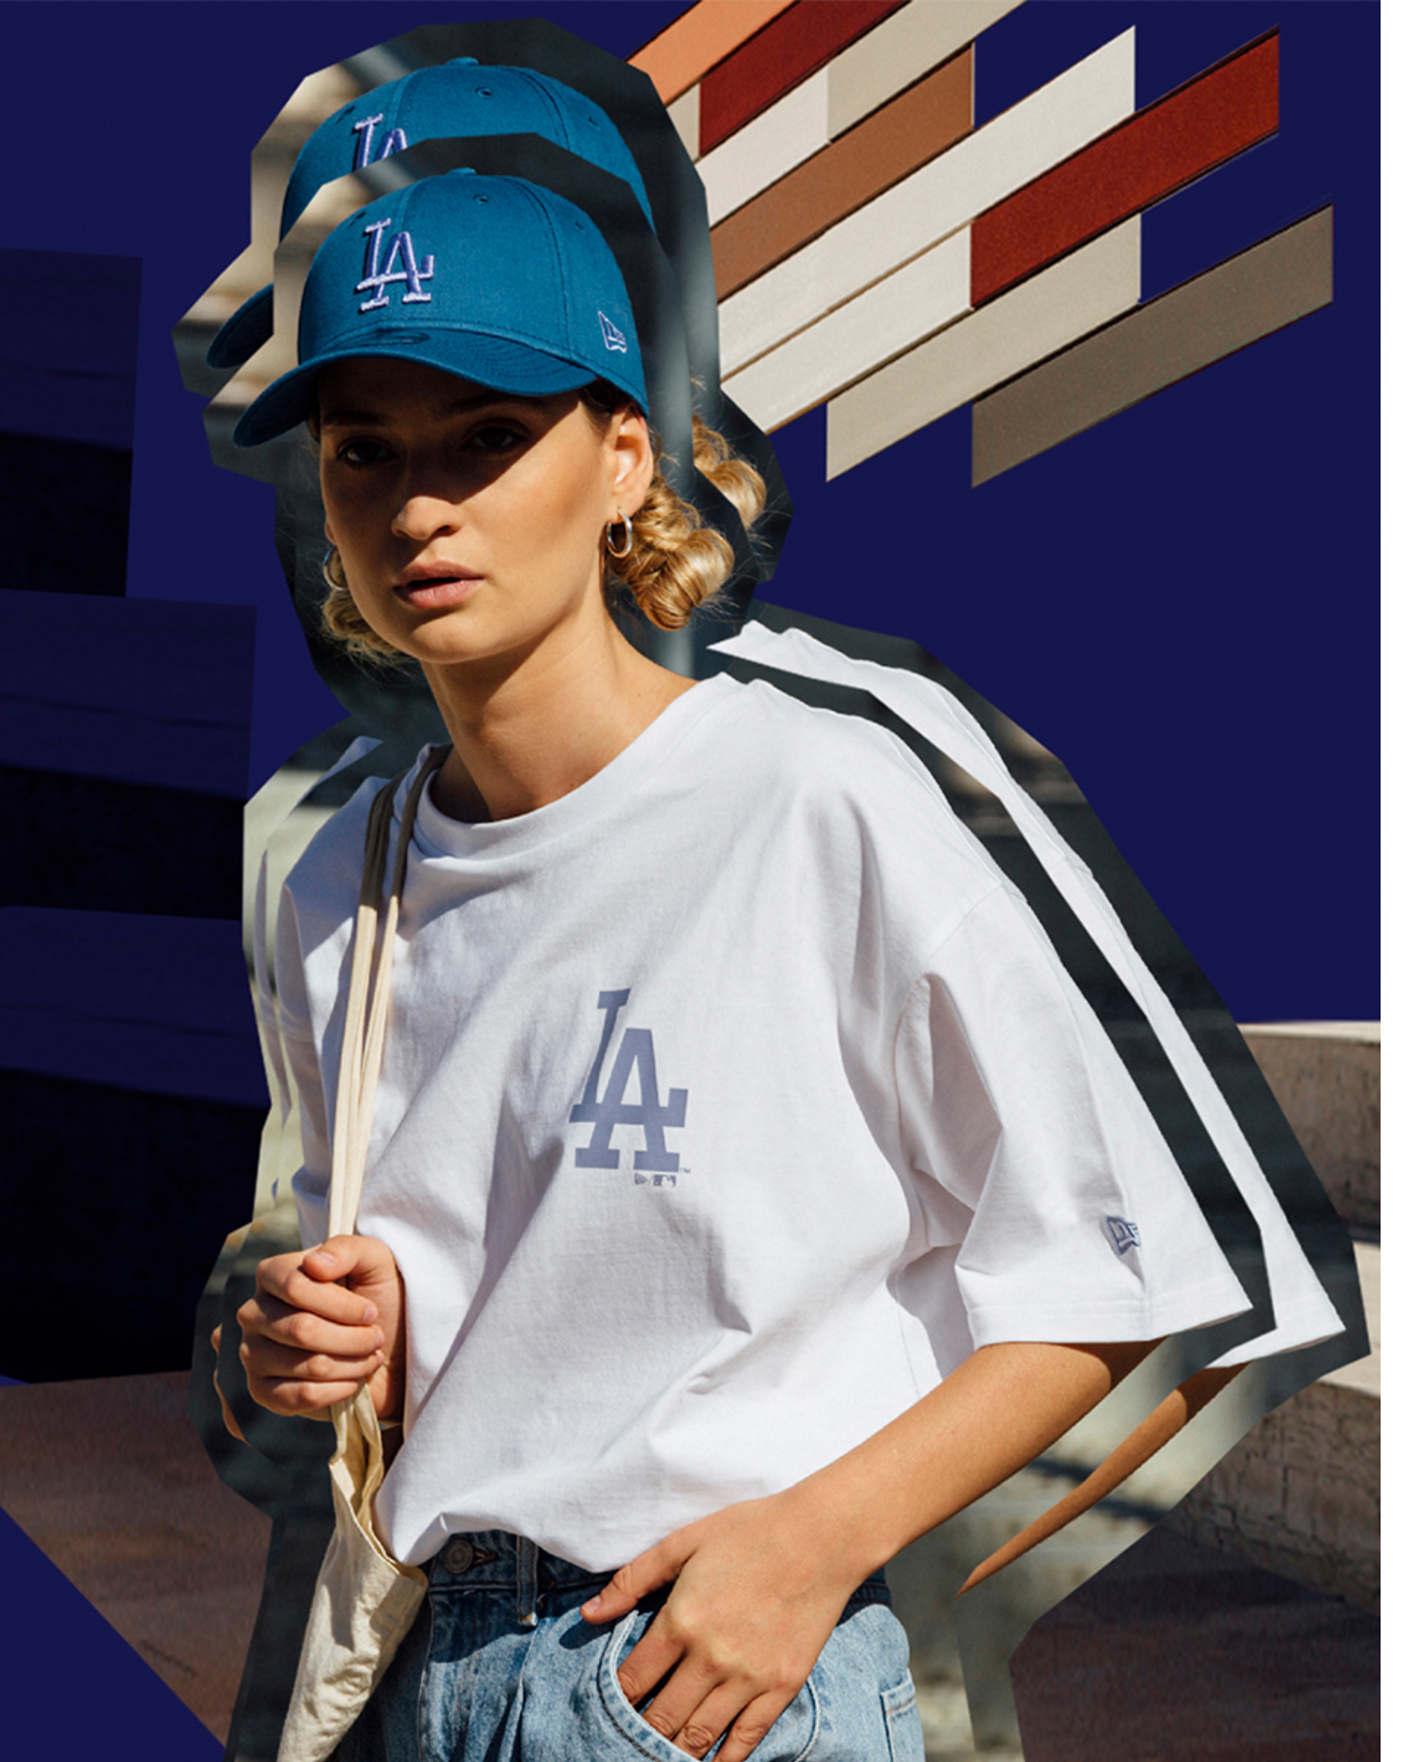 MLB Colour LA Dodgers headwear and apparel